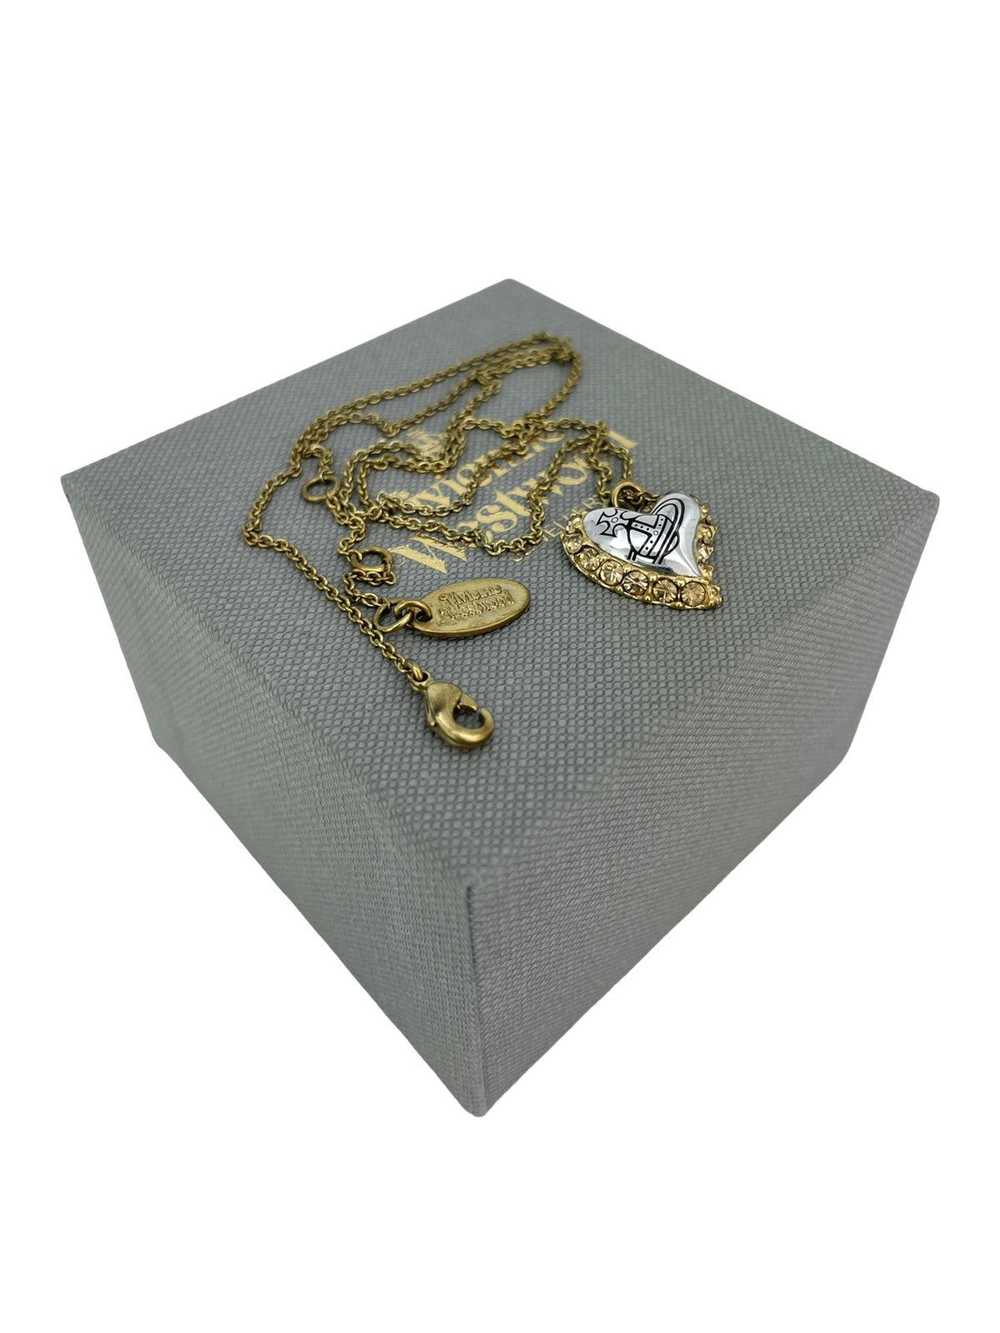 Vivienne Westwood Crystal Heart Orb Necklace - image 3